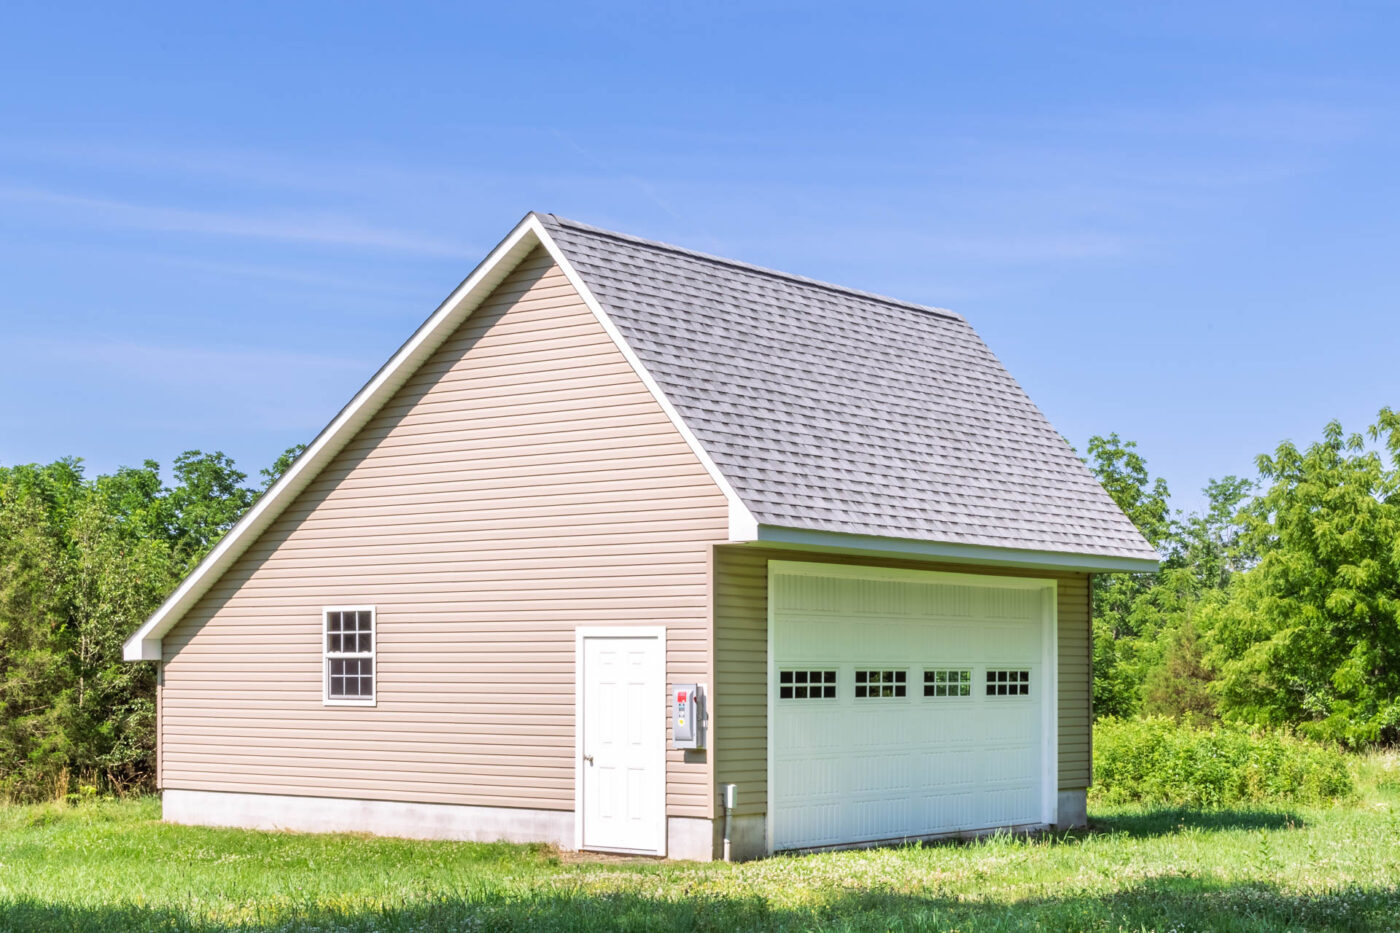 double-wide saltbox garage for sale Woodbridge township, NJ